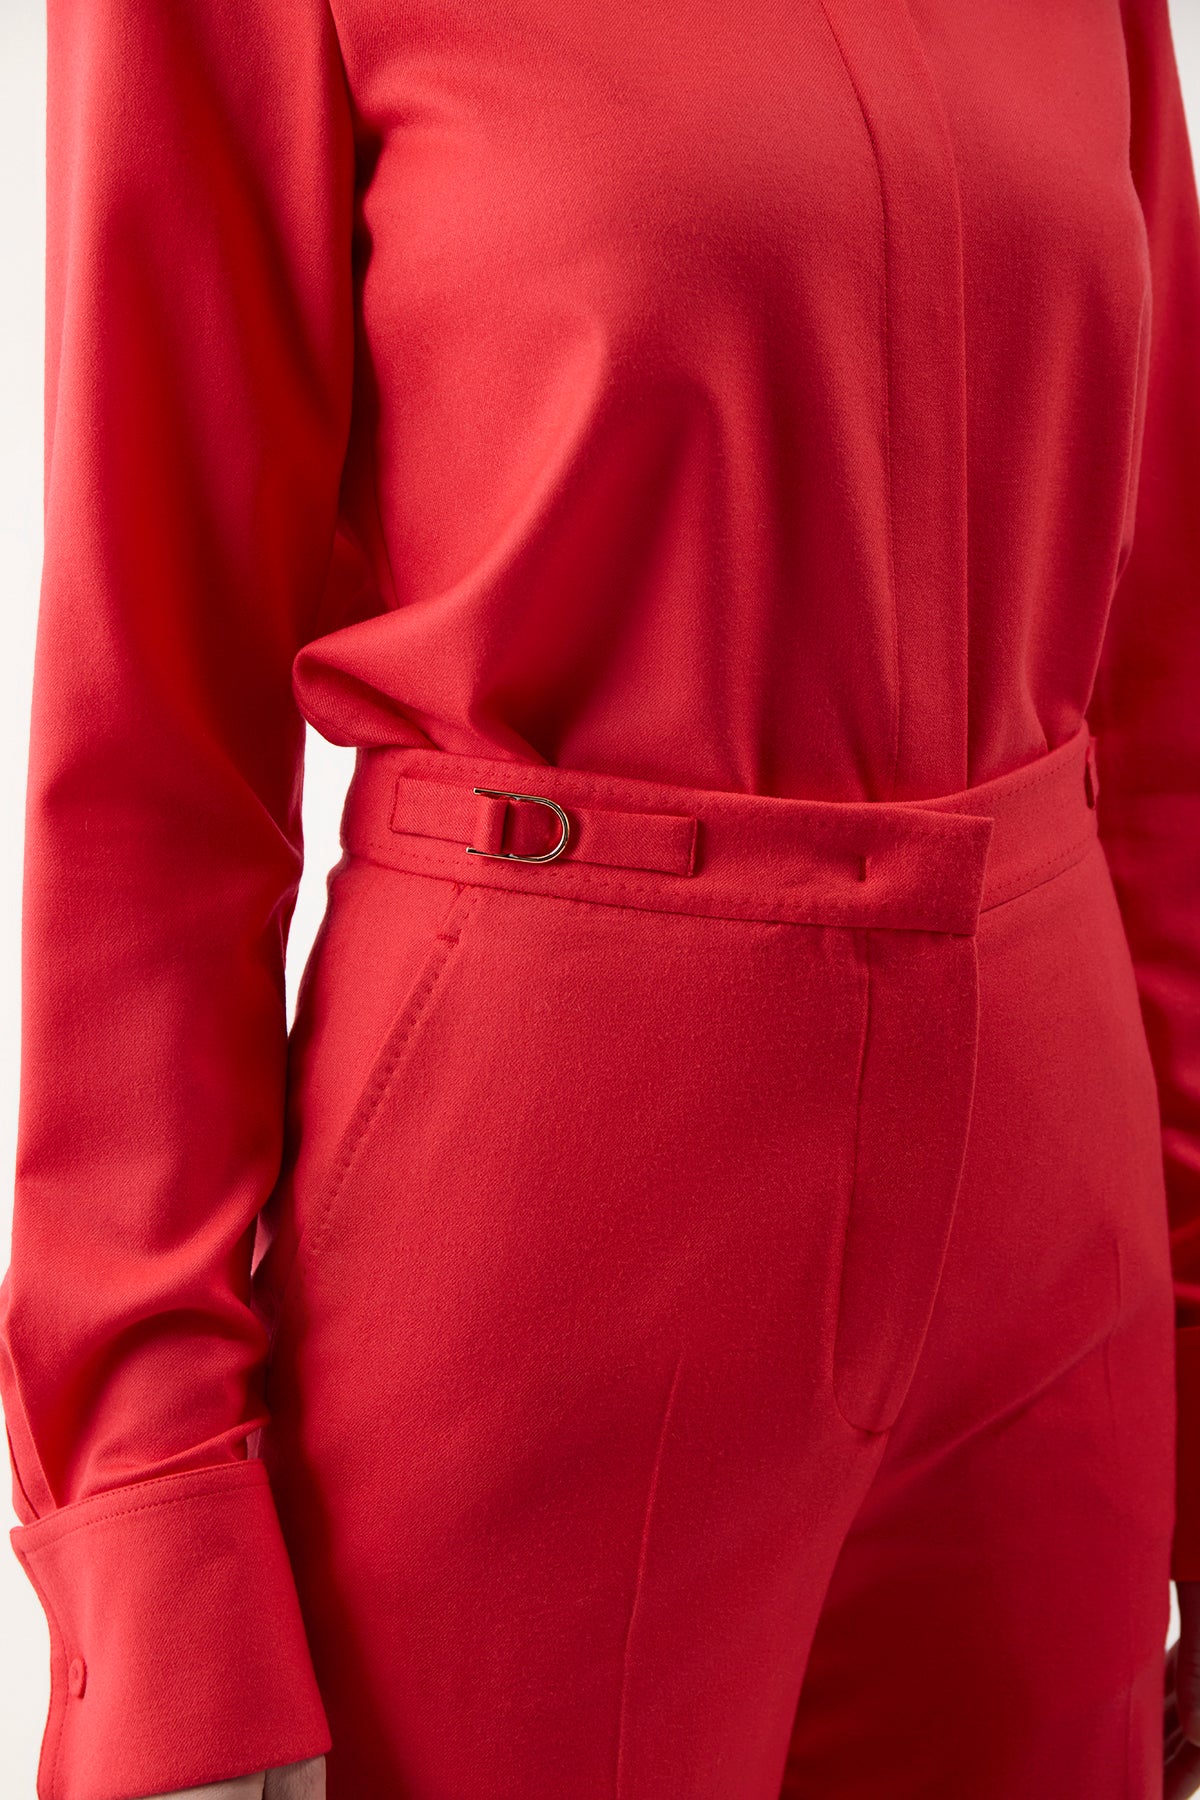 Vesta Pant in Red Topaz Superfine Wool